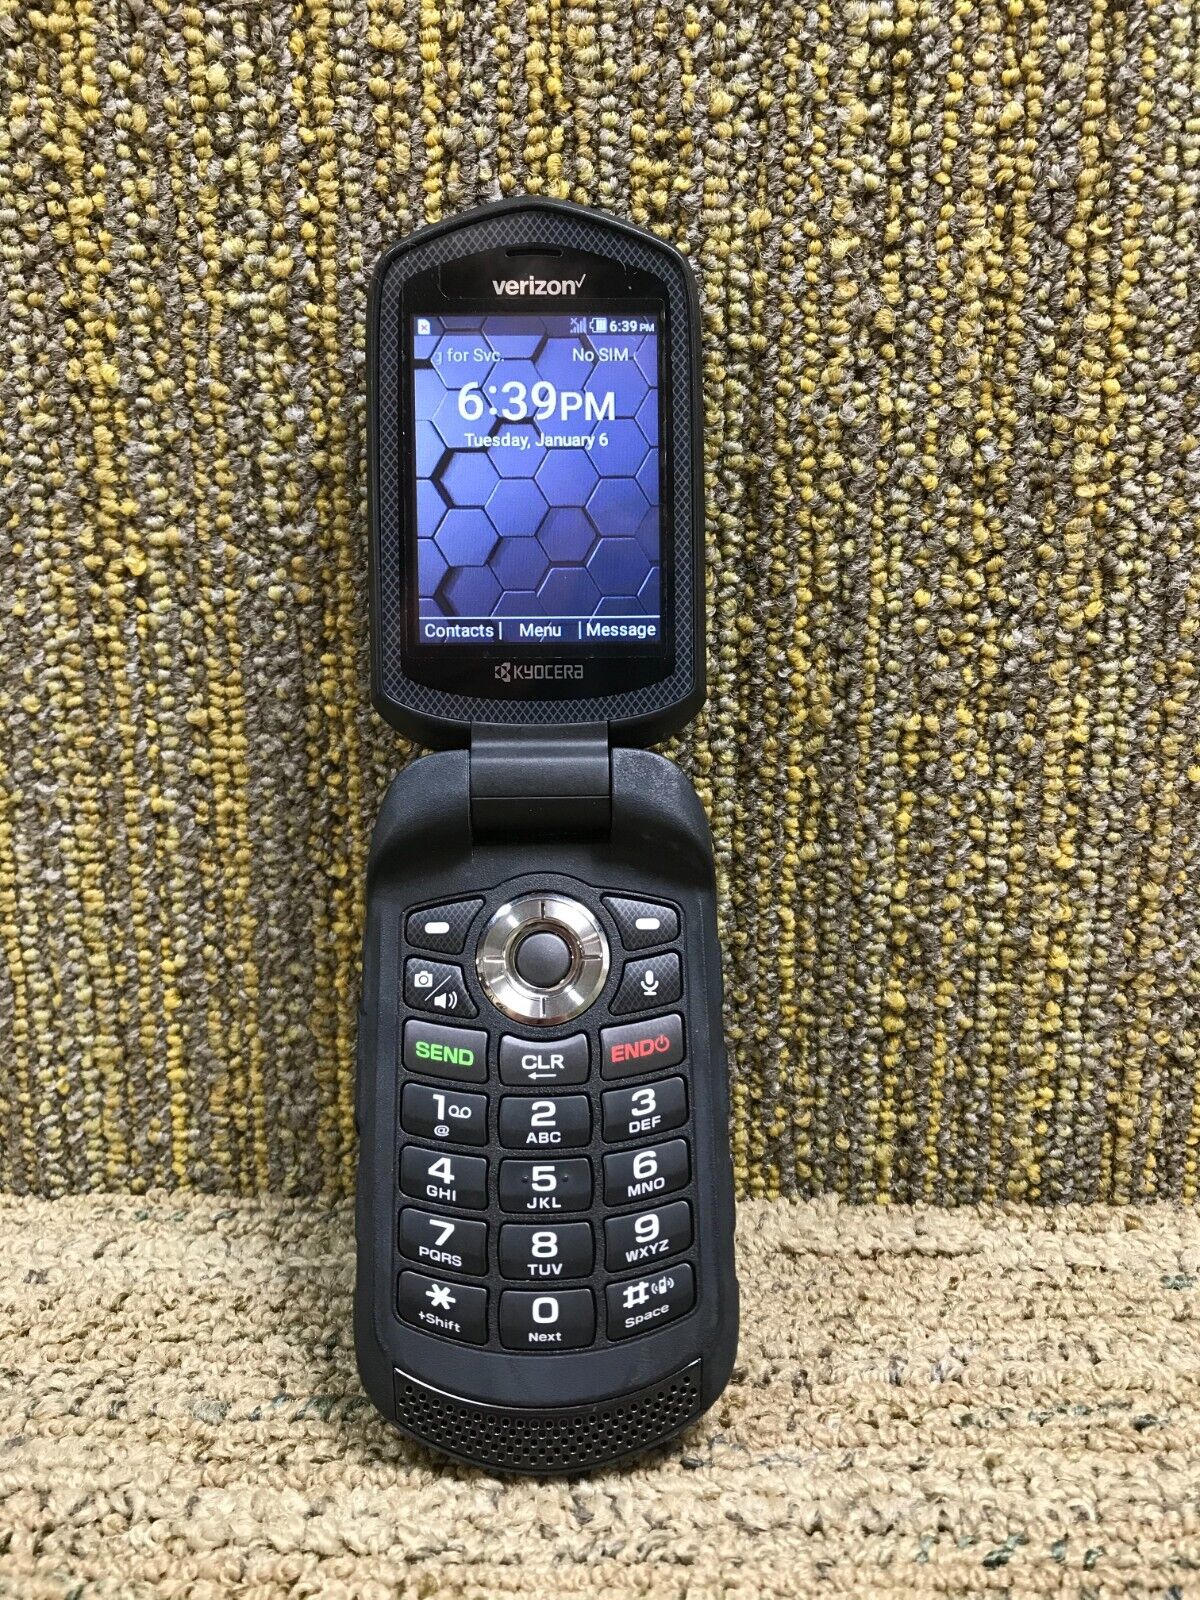 KYOCERA E4610 DURAXV LTE RUGGED FLIP PHONE VERIZON